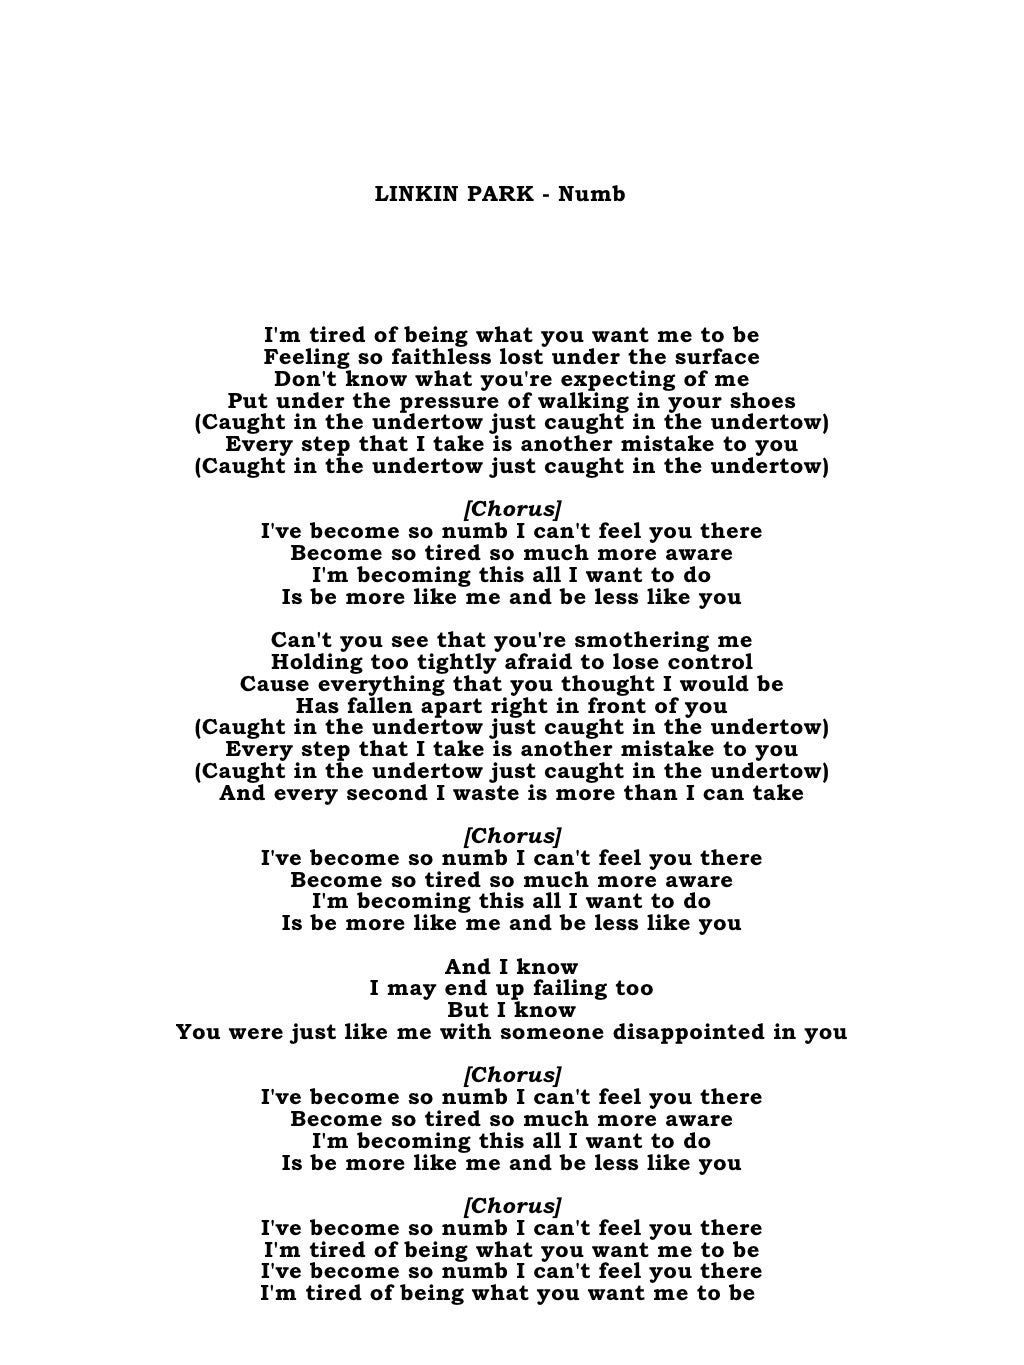 Песни линкина парка на русском. Намб текст. Linkin Park Numb. Текст песни намб. Линкин парк Numb перевод.